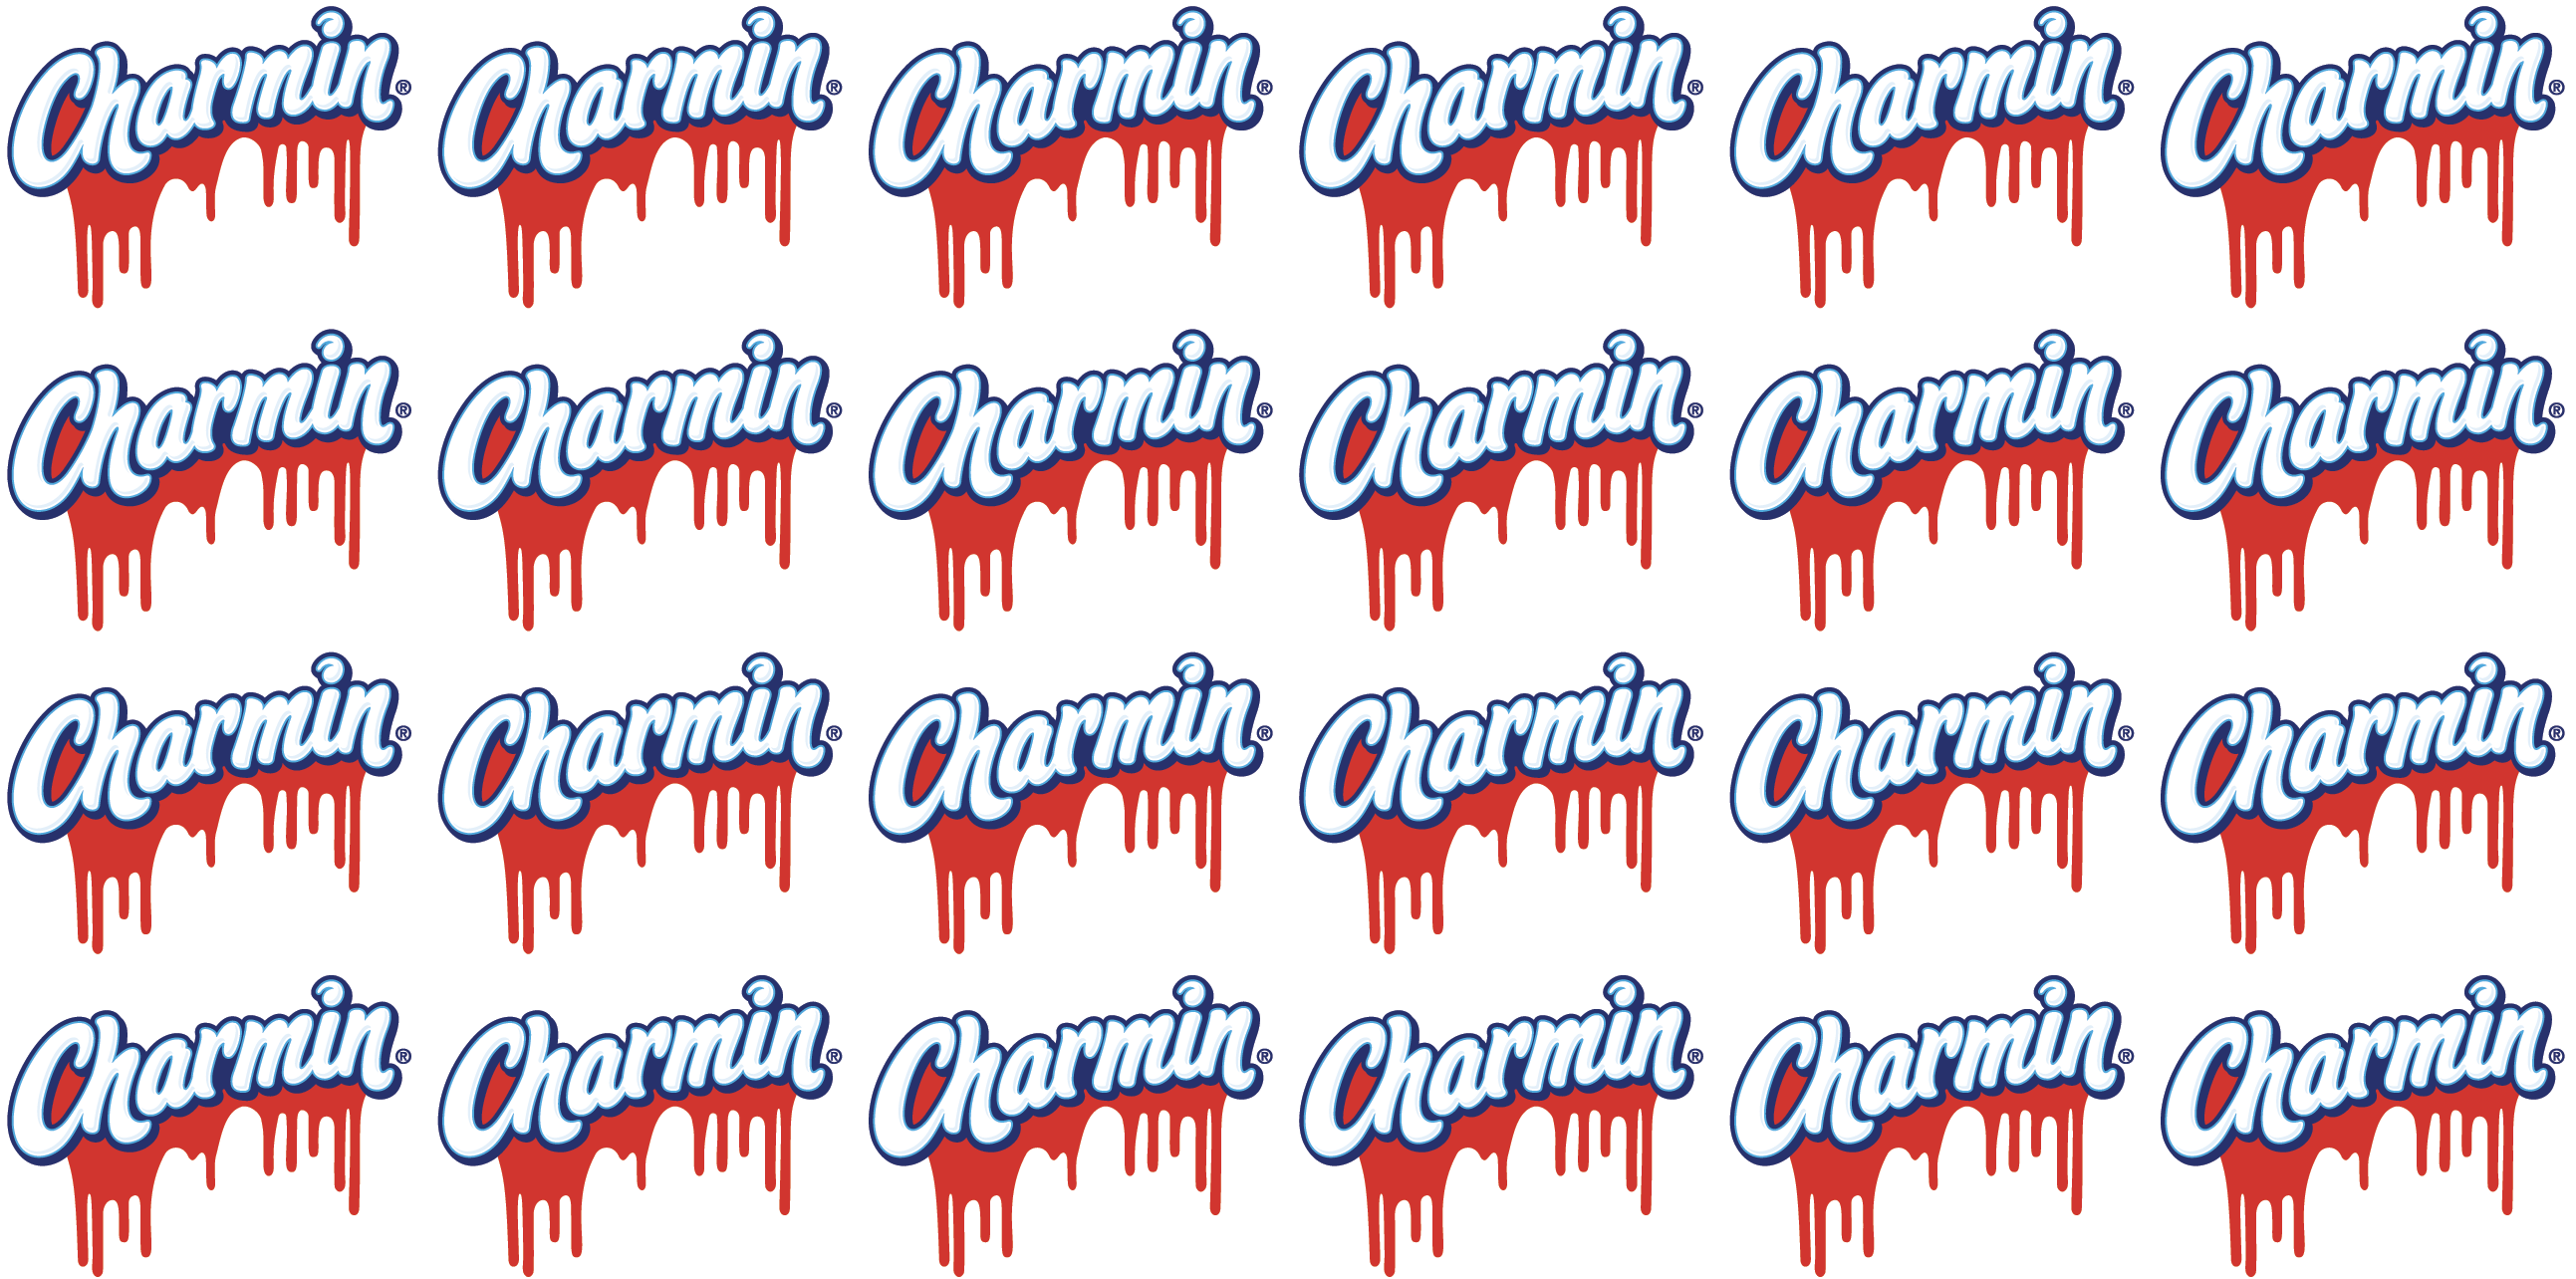 Charmin logo dripping blood